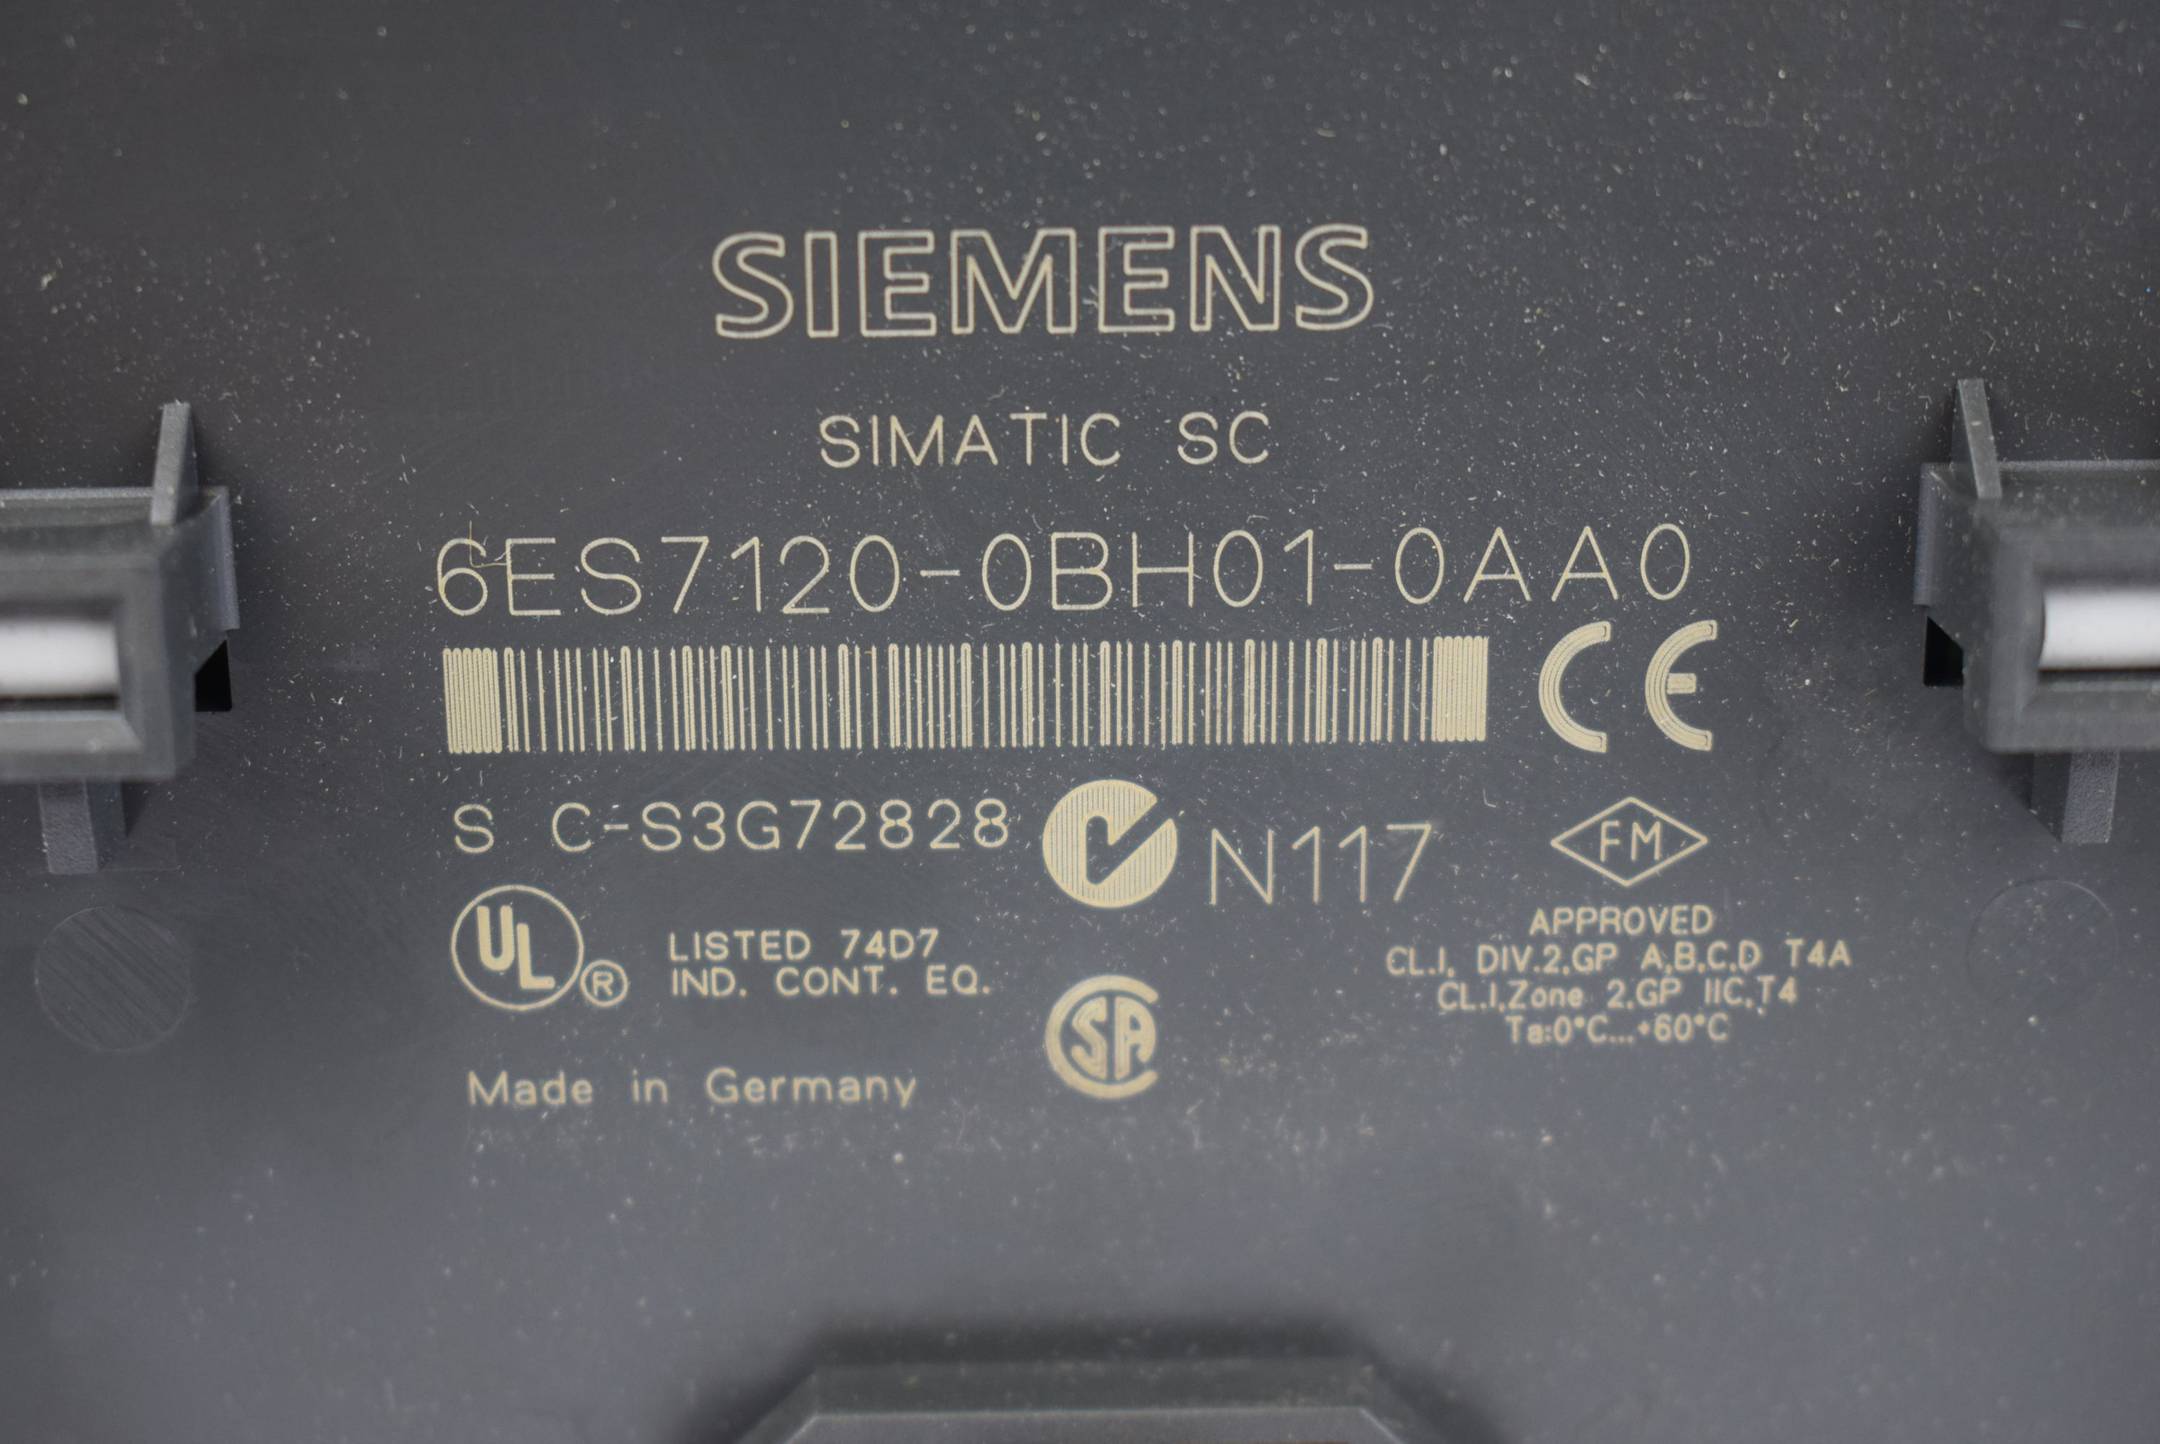 Siemens simatic SC 6ES7120-0BH01-0AA0 ( 6ES7 120-0BH01-0AA0 )